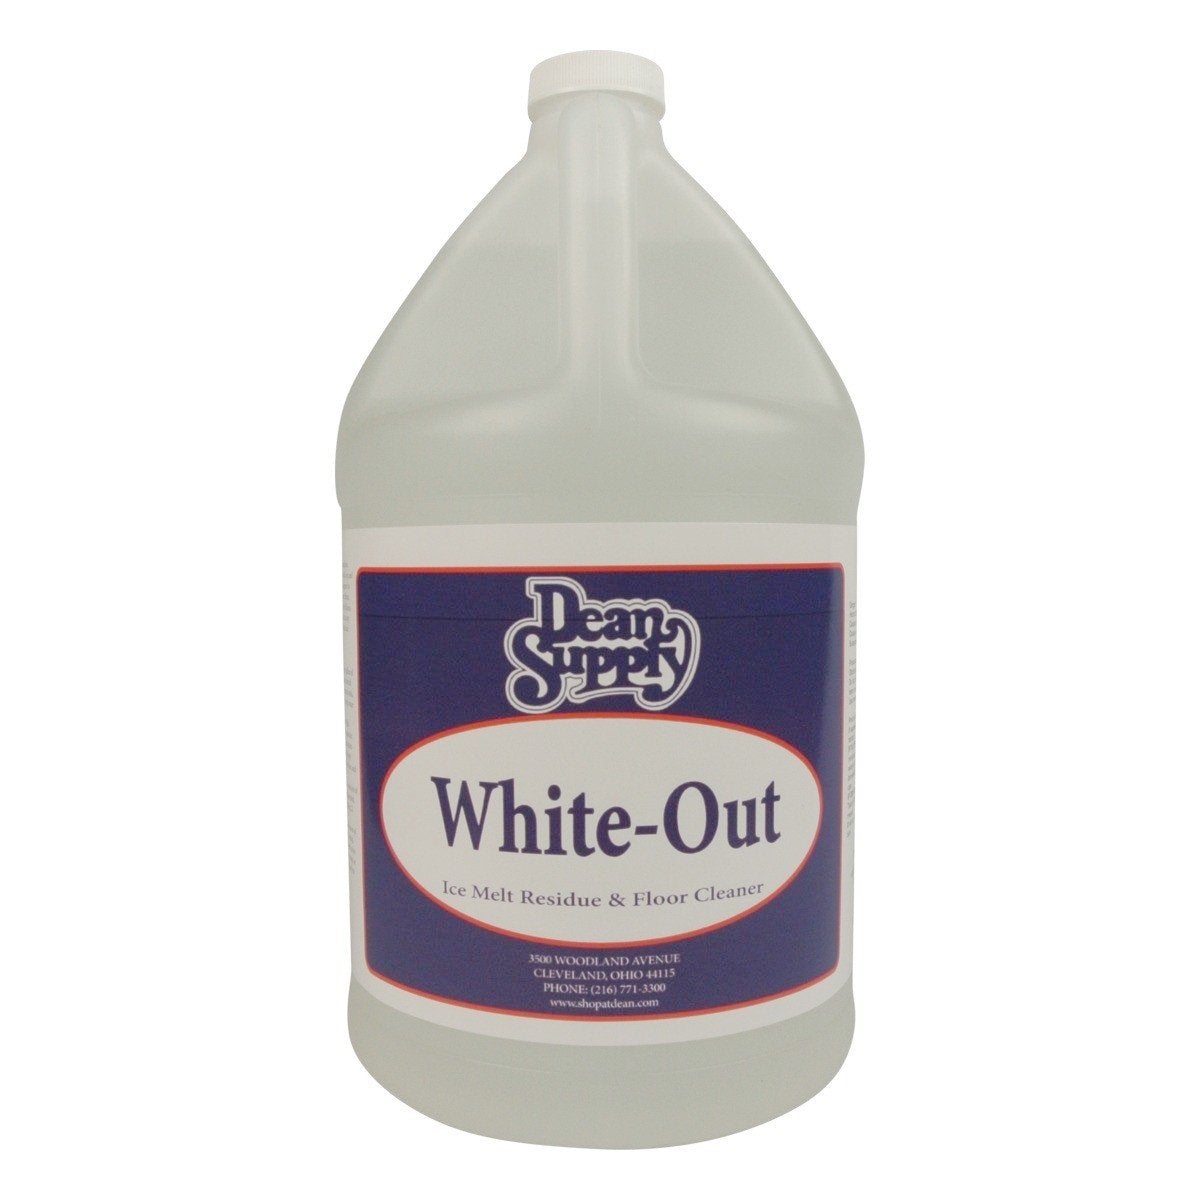 OUT White Brite Laundry Whitener Powder, 1 lb 12 oz, 2 Bottles 